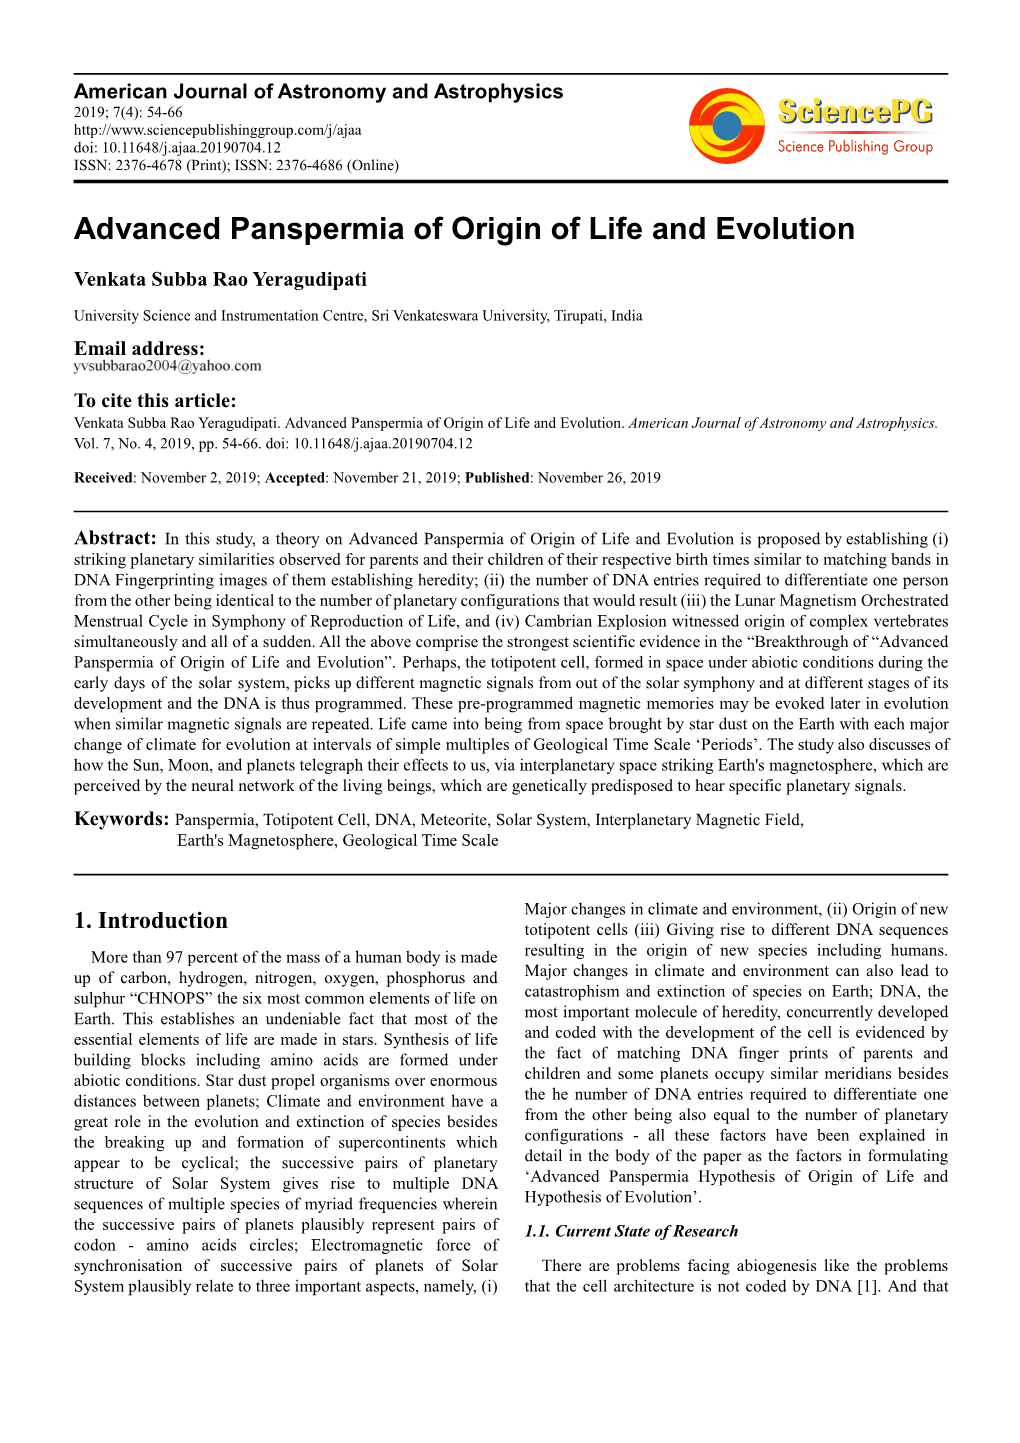 Advanced Panspermia of Origin of Life and Evolution